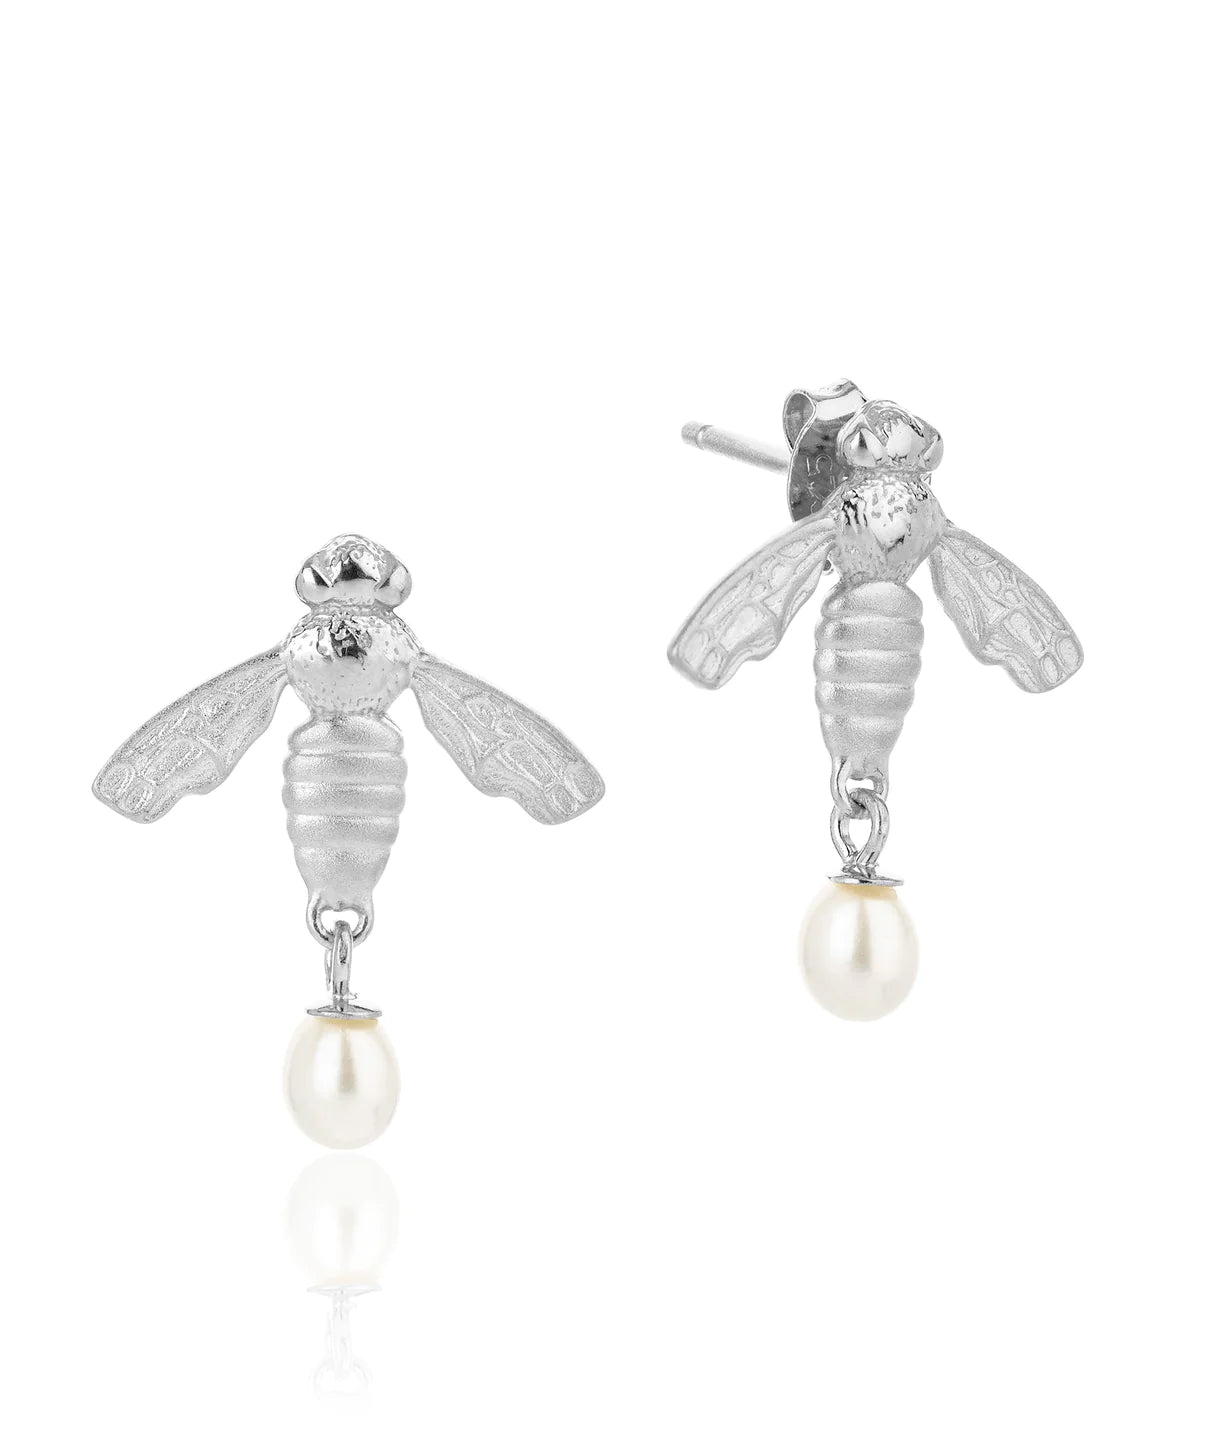 Silver flying bee stud earrings with butterfly fastening and teardrop pearl